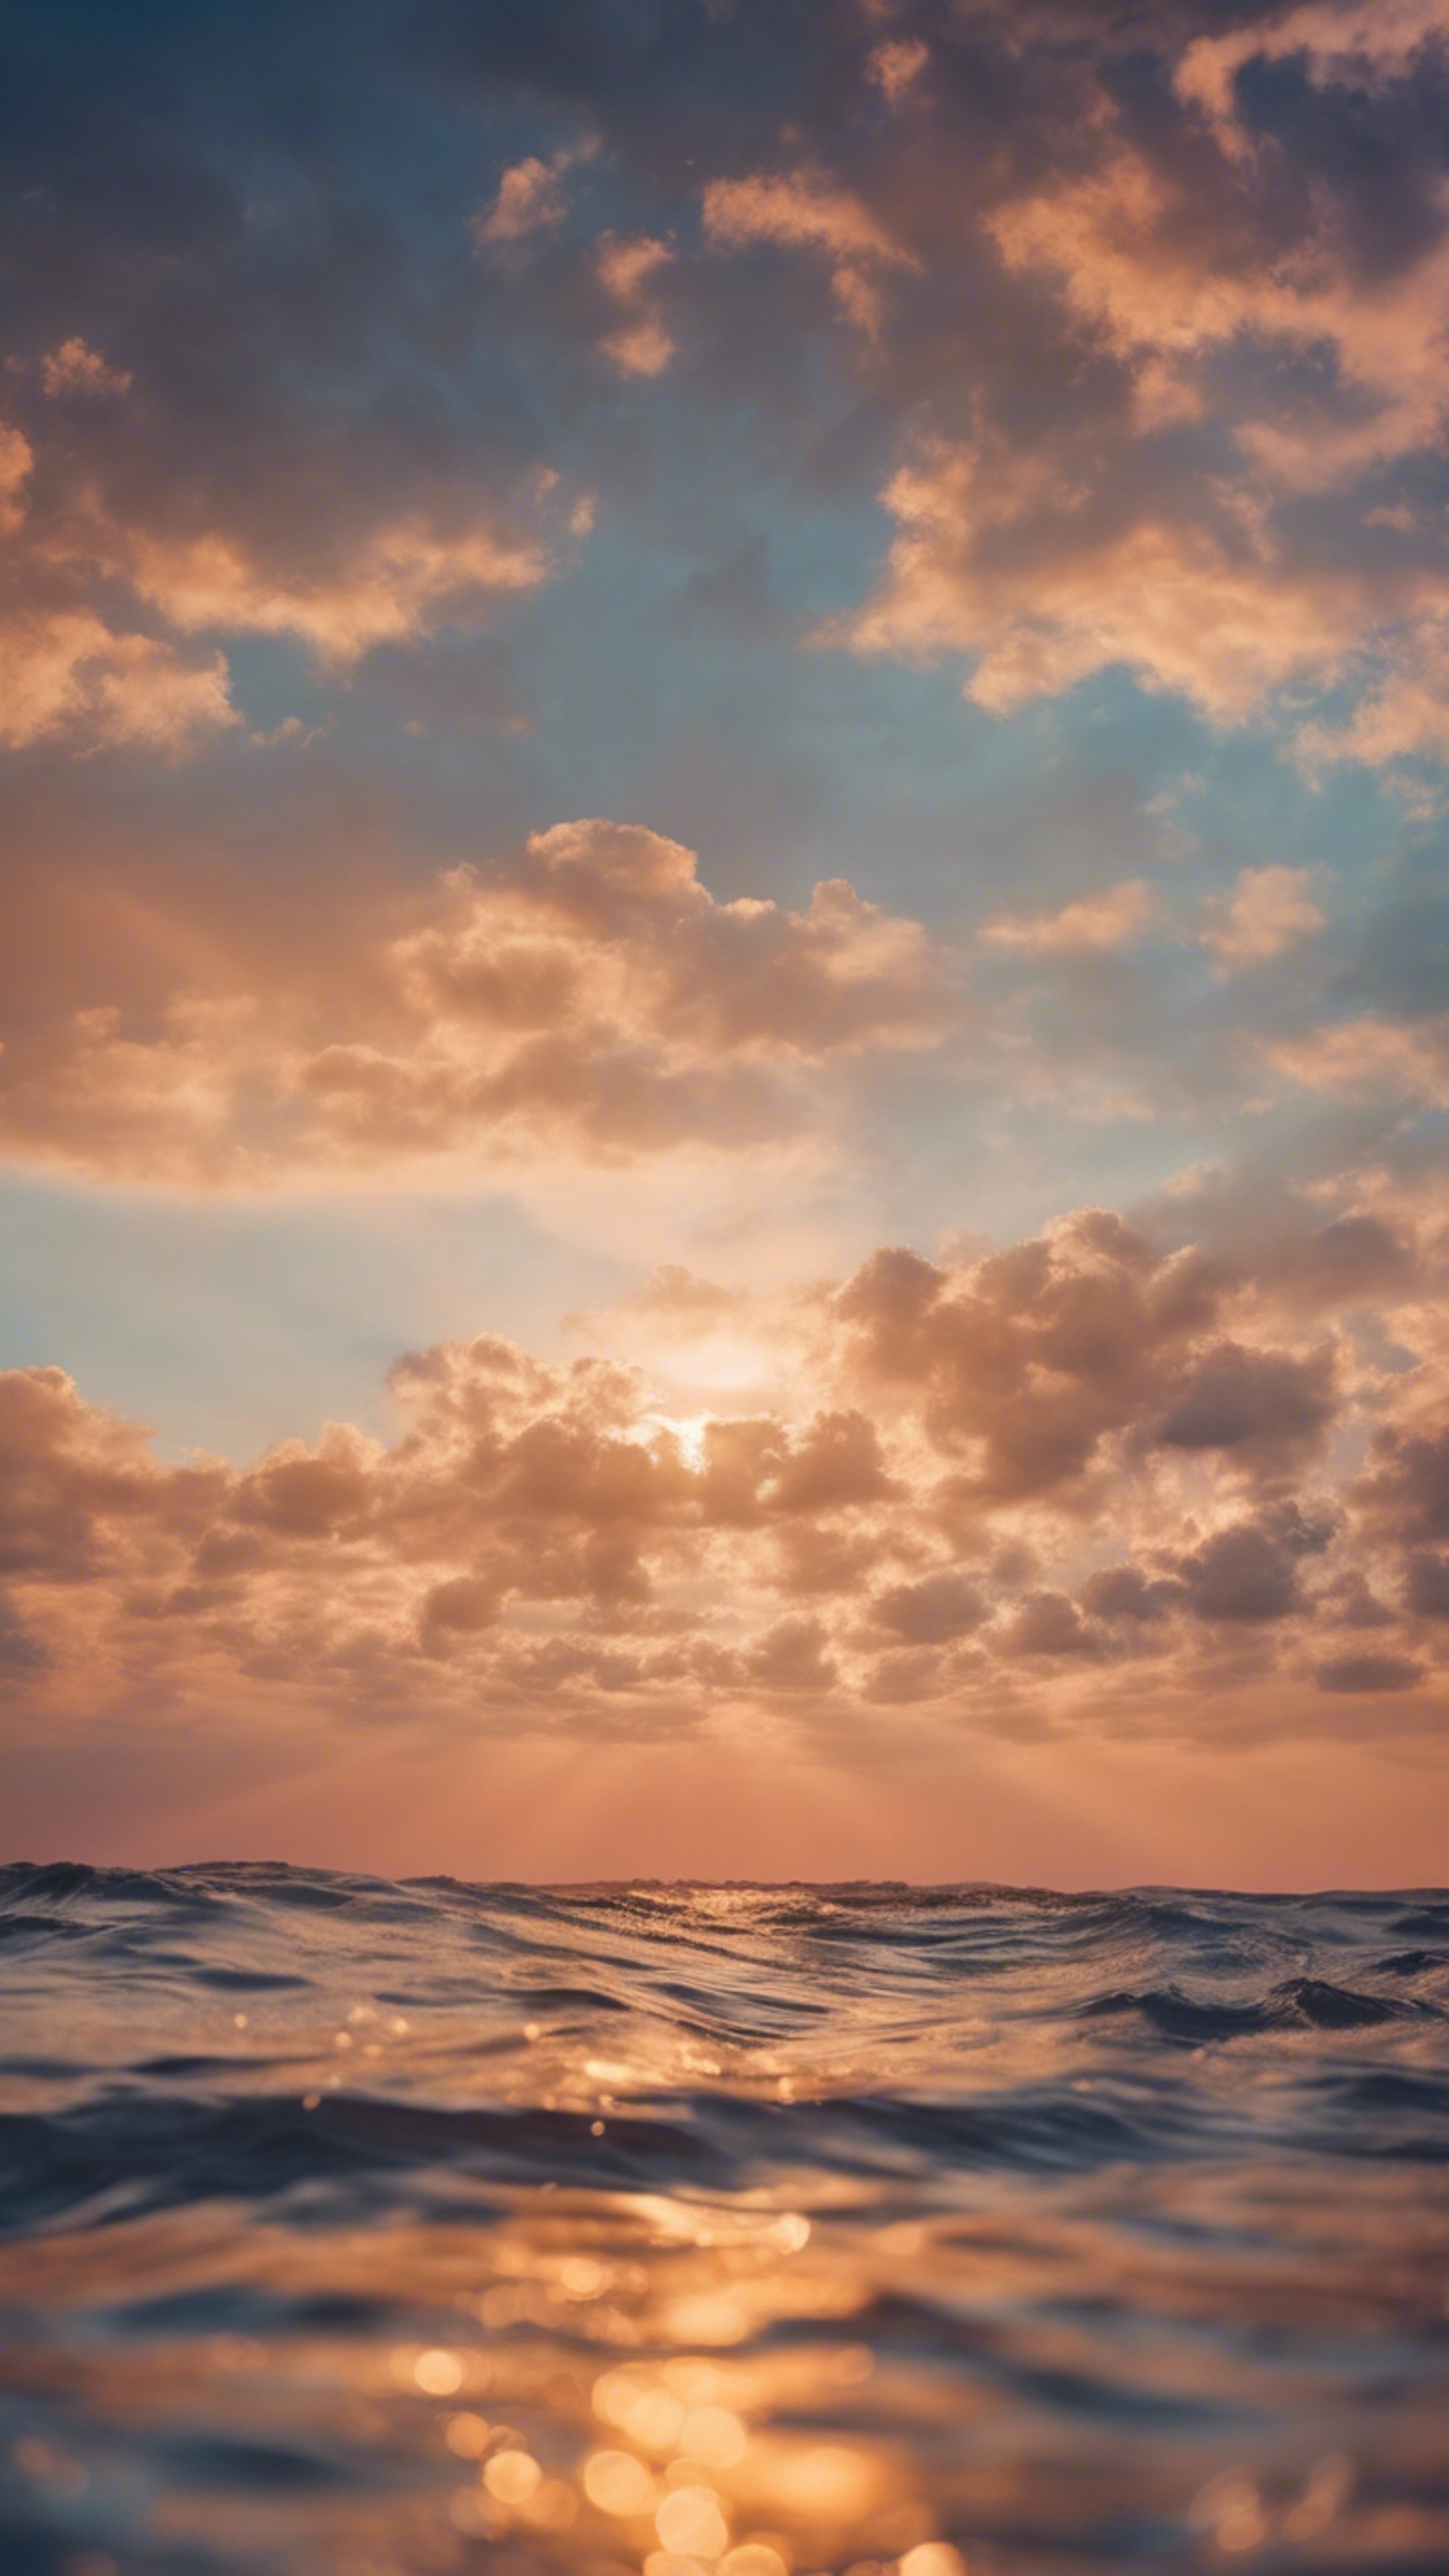 A dream scenario of a deep sapphire sea meeting the heavenly light peach hues of the sky at sunset. Tapet[ea94eb2fc81f4c8faf8f]